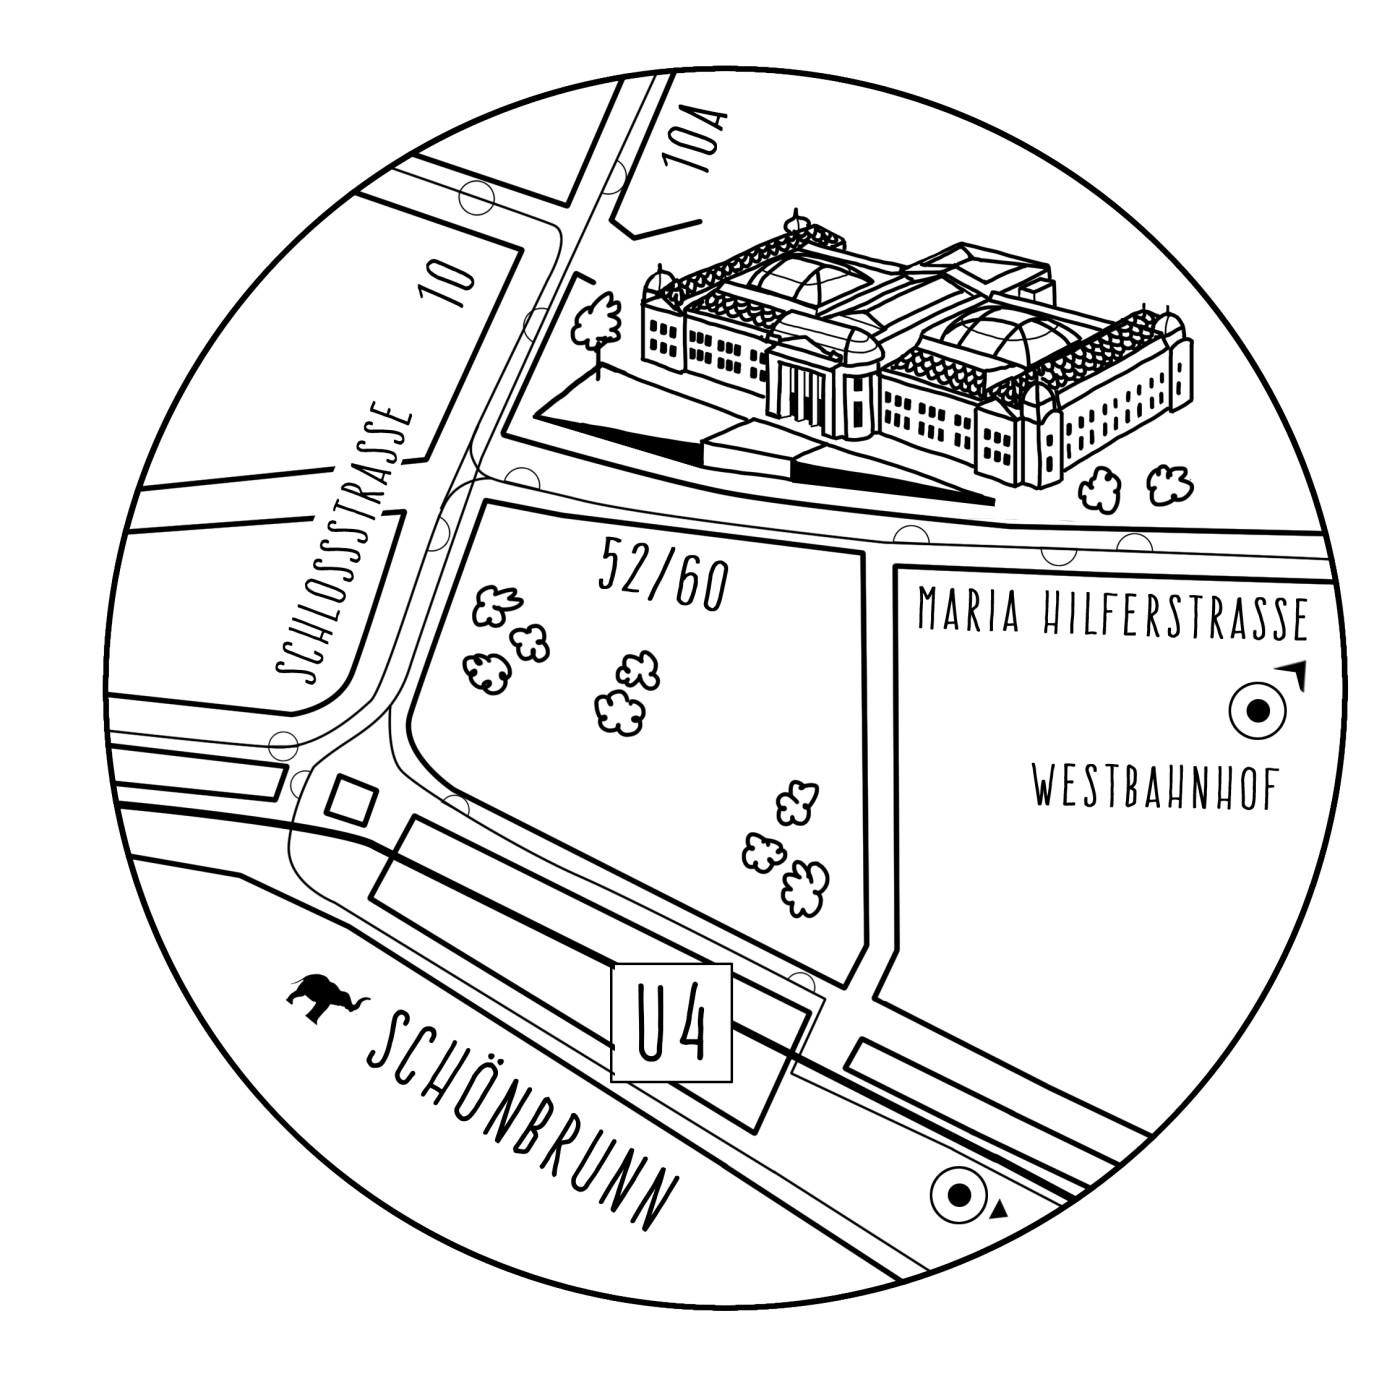 Map of the area around Technisches Museum Wien: 